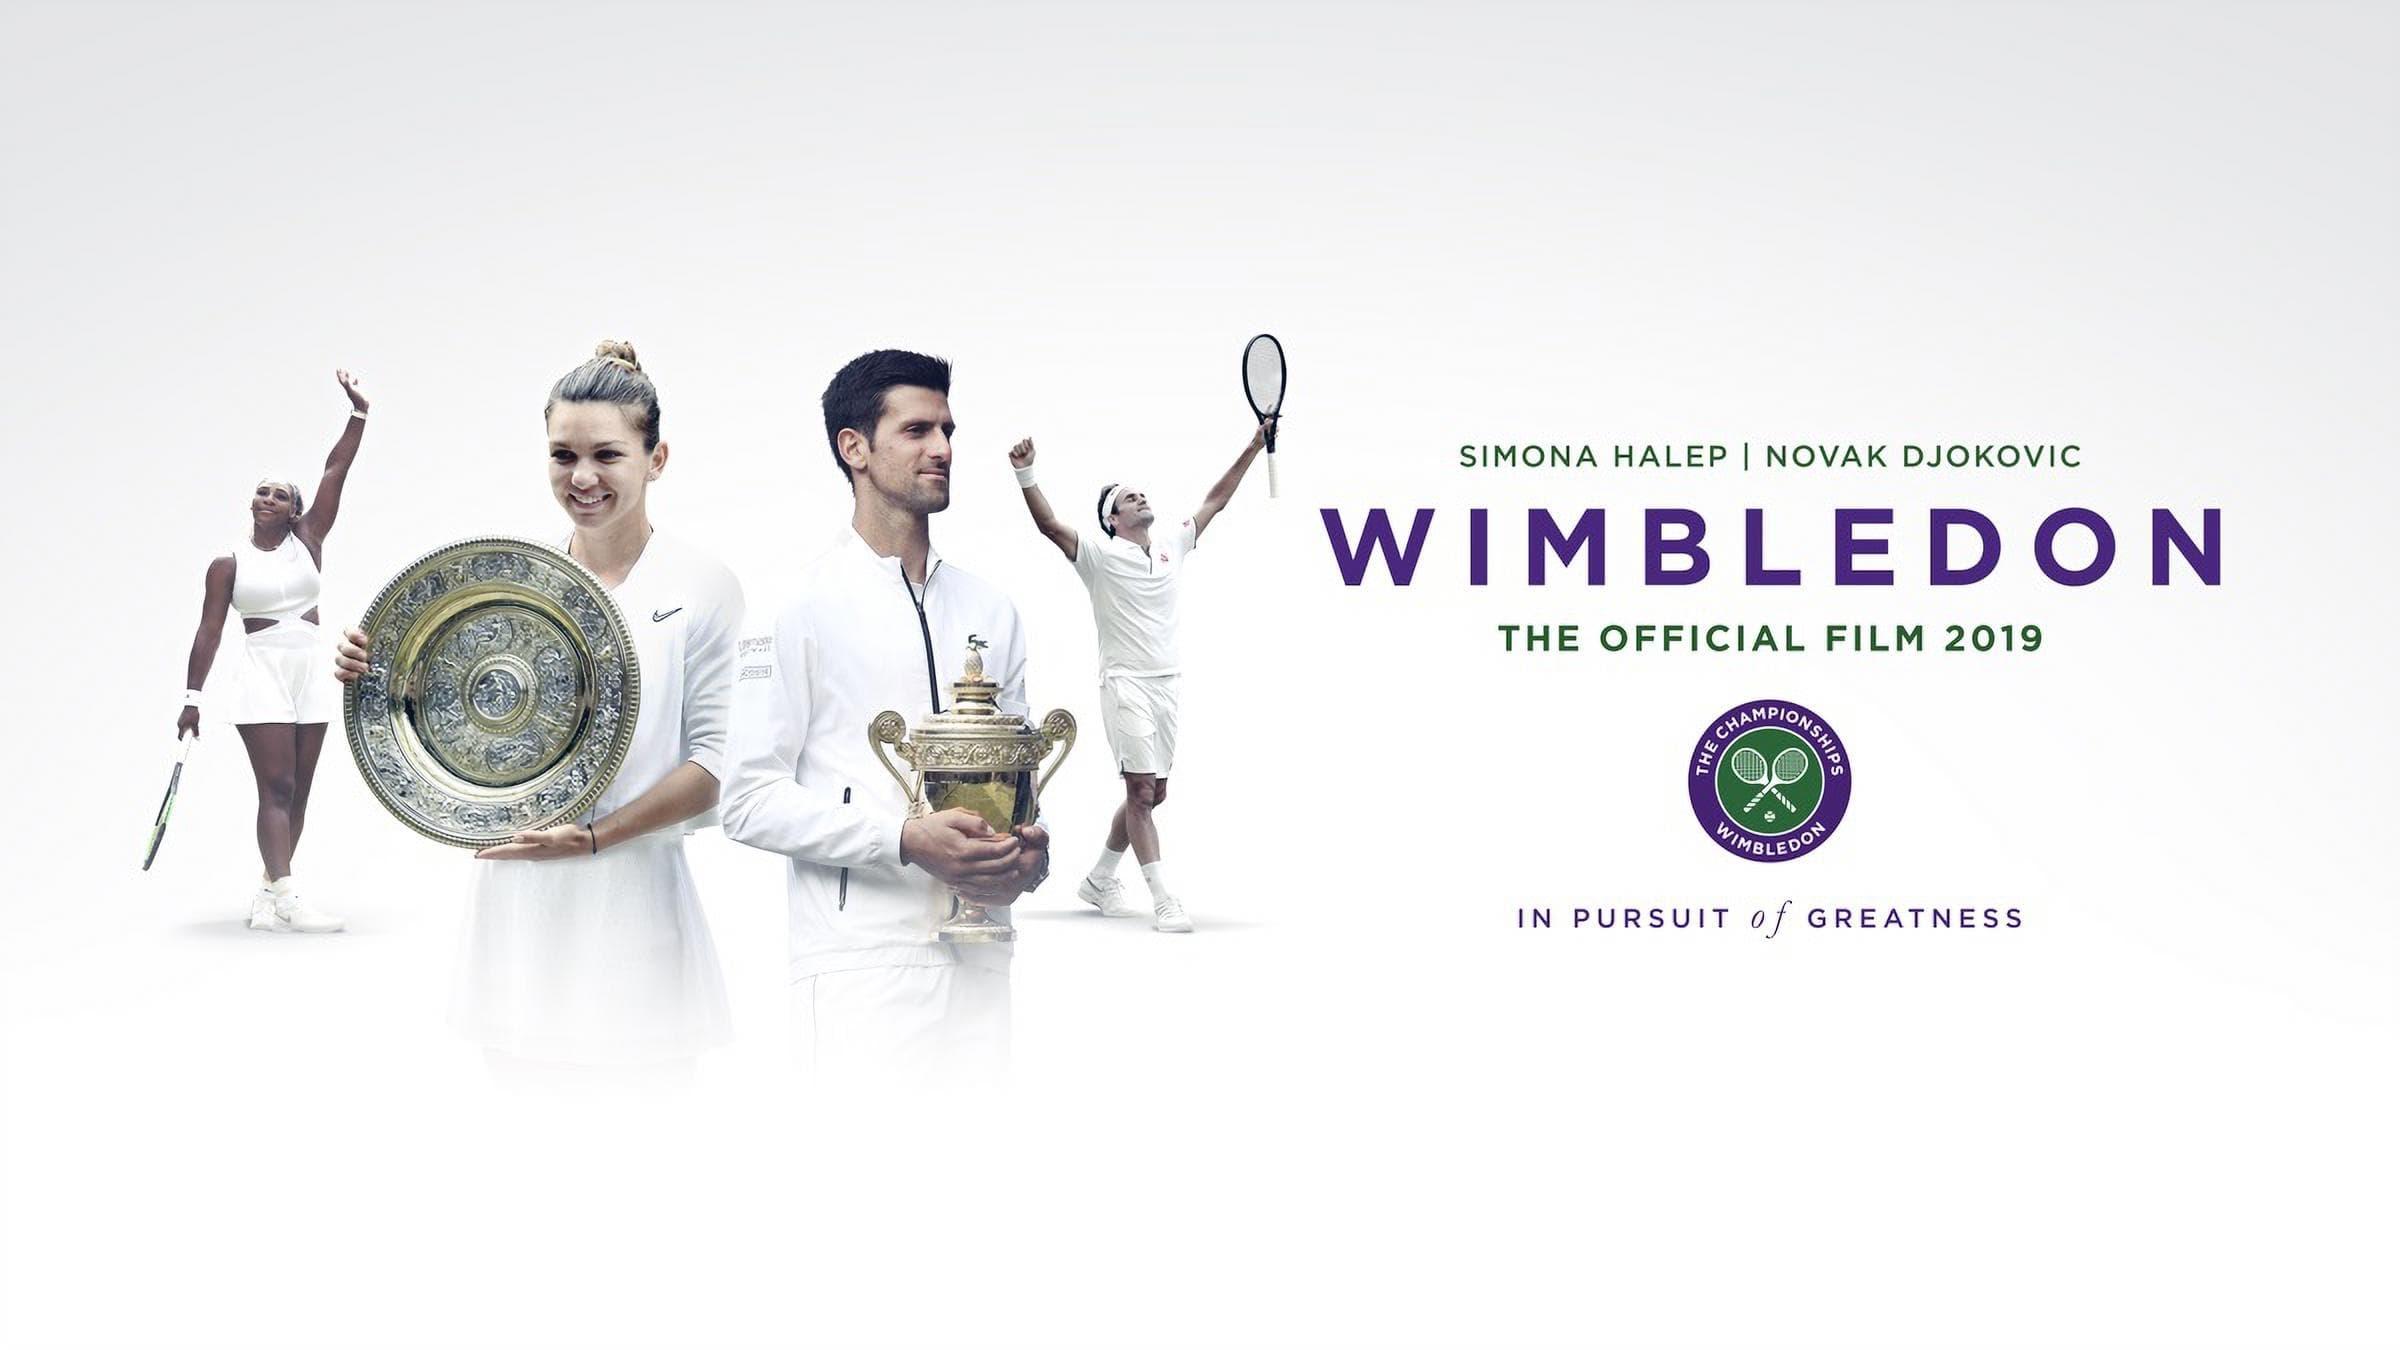 Wimbledon, 2019 Official Film backdrop